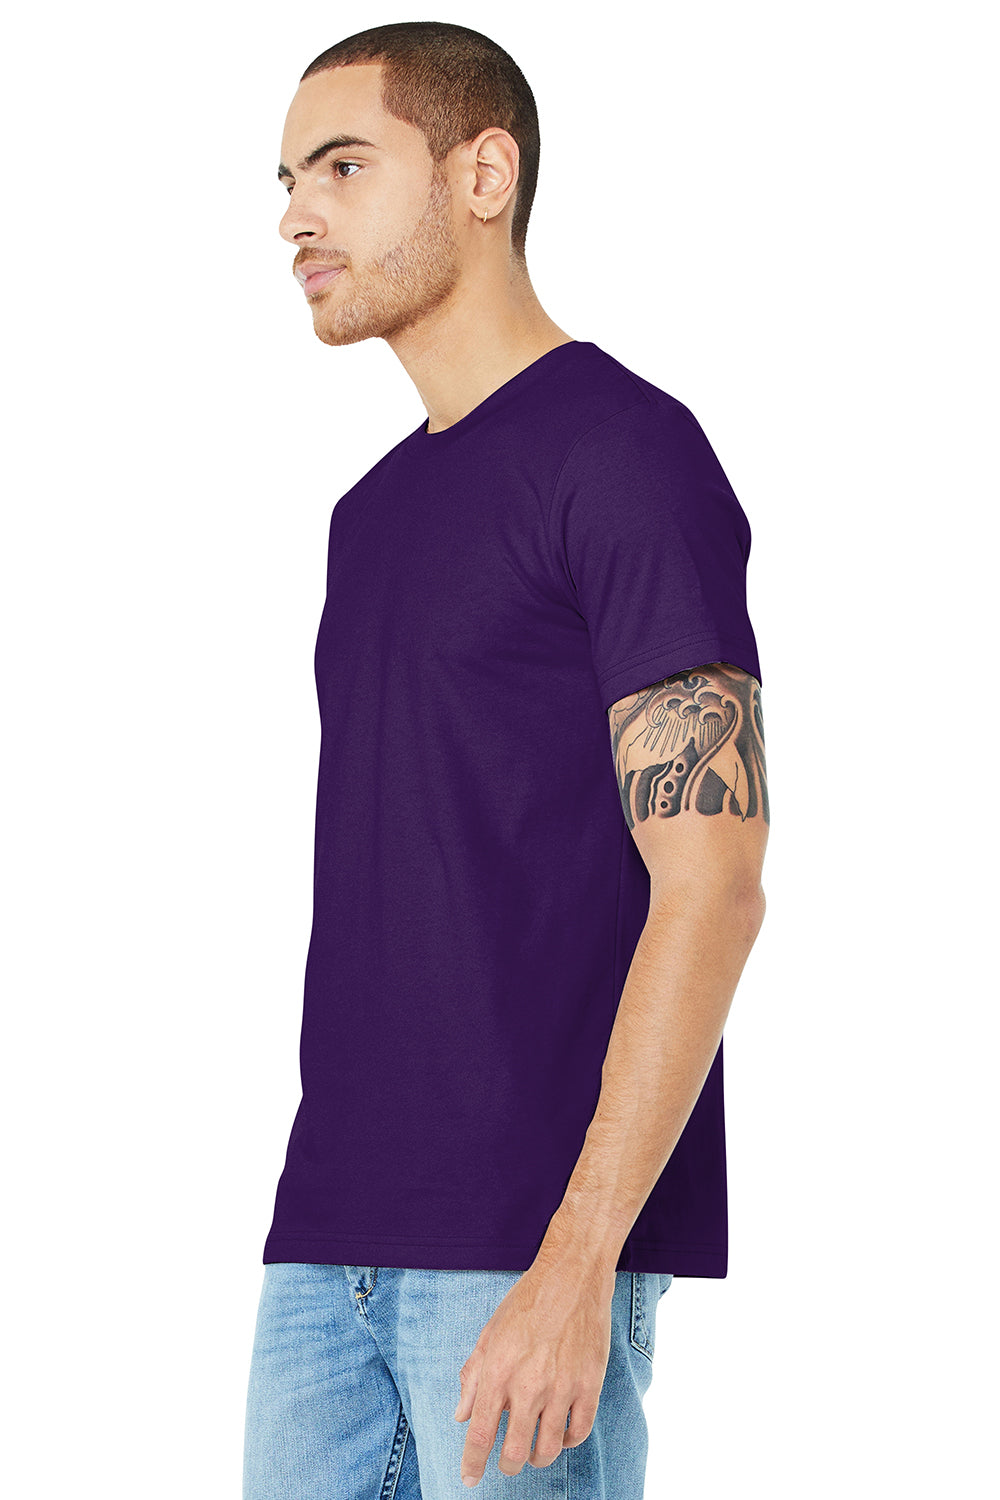 Bella + Canvas BC3001/3001C Mens Jersey Short Sleeve Crewneck T-Shirt Team Purple Model 3Q